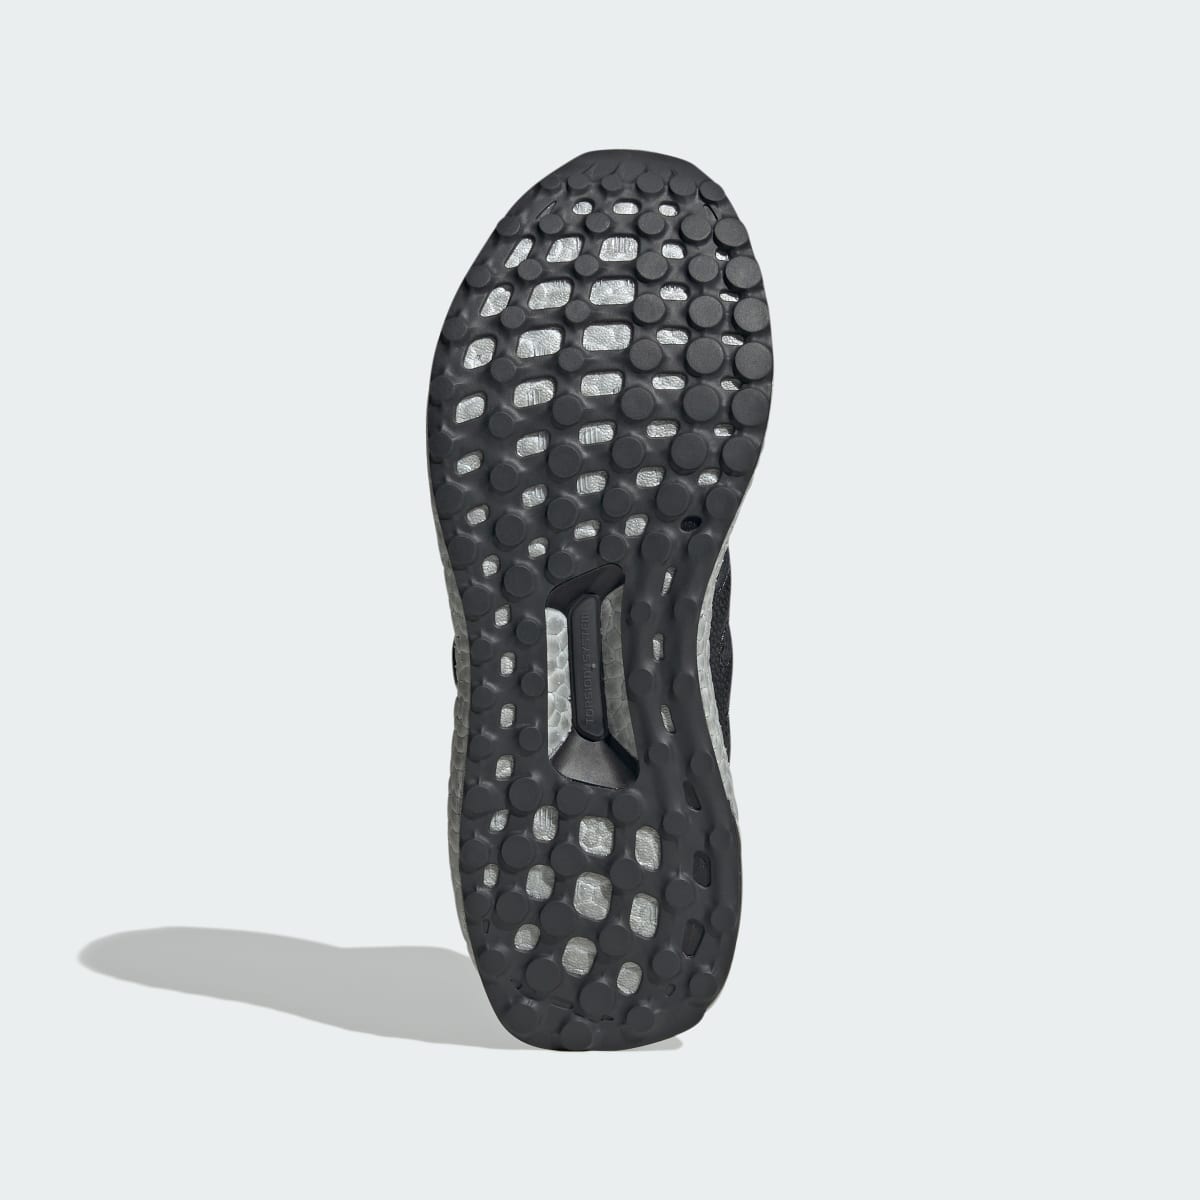 Adidas Ultraboost 1.0 Schuh. 5